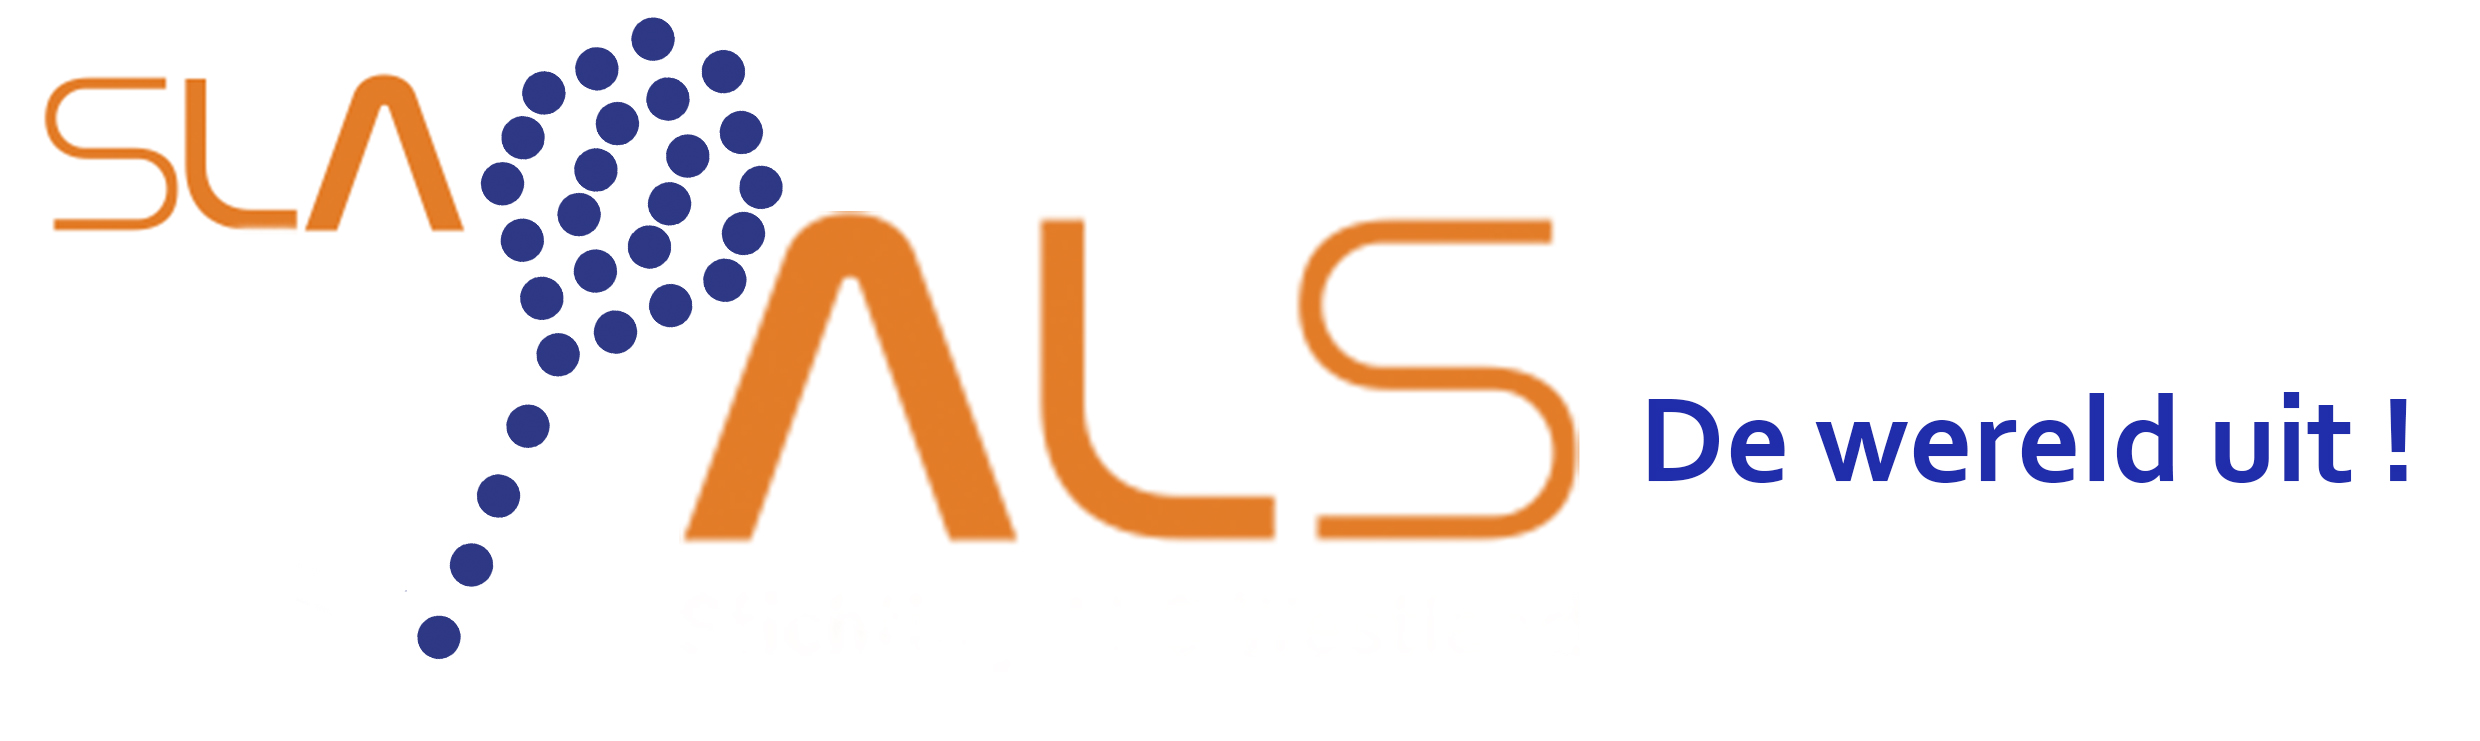 Flyer ALS logo boven